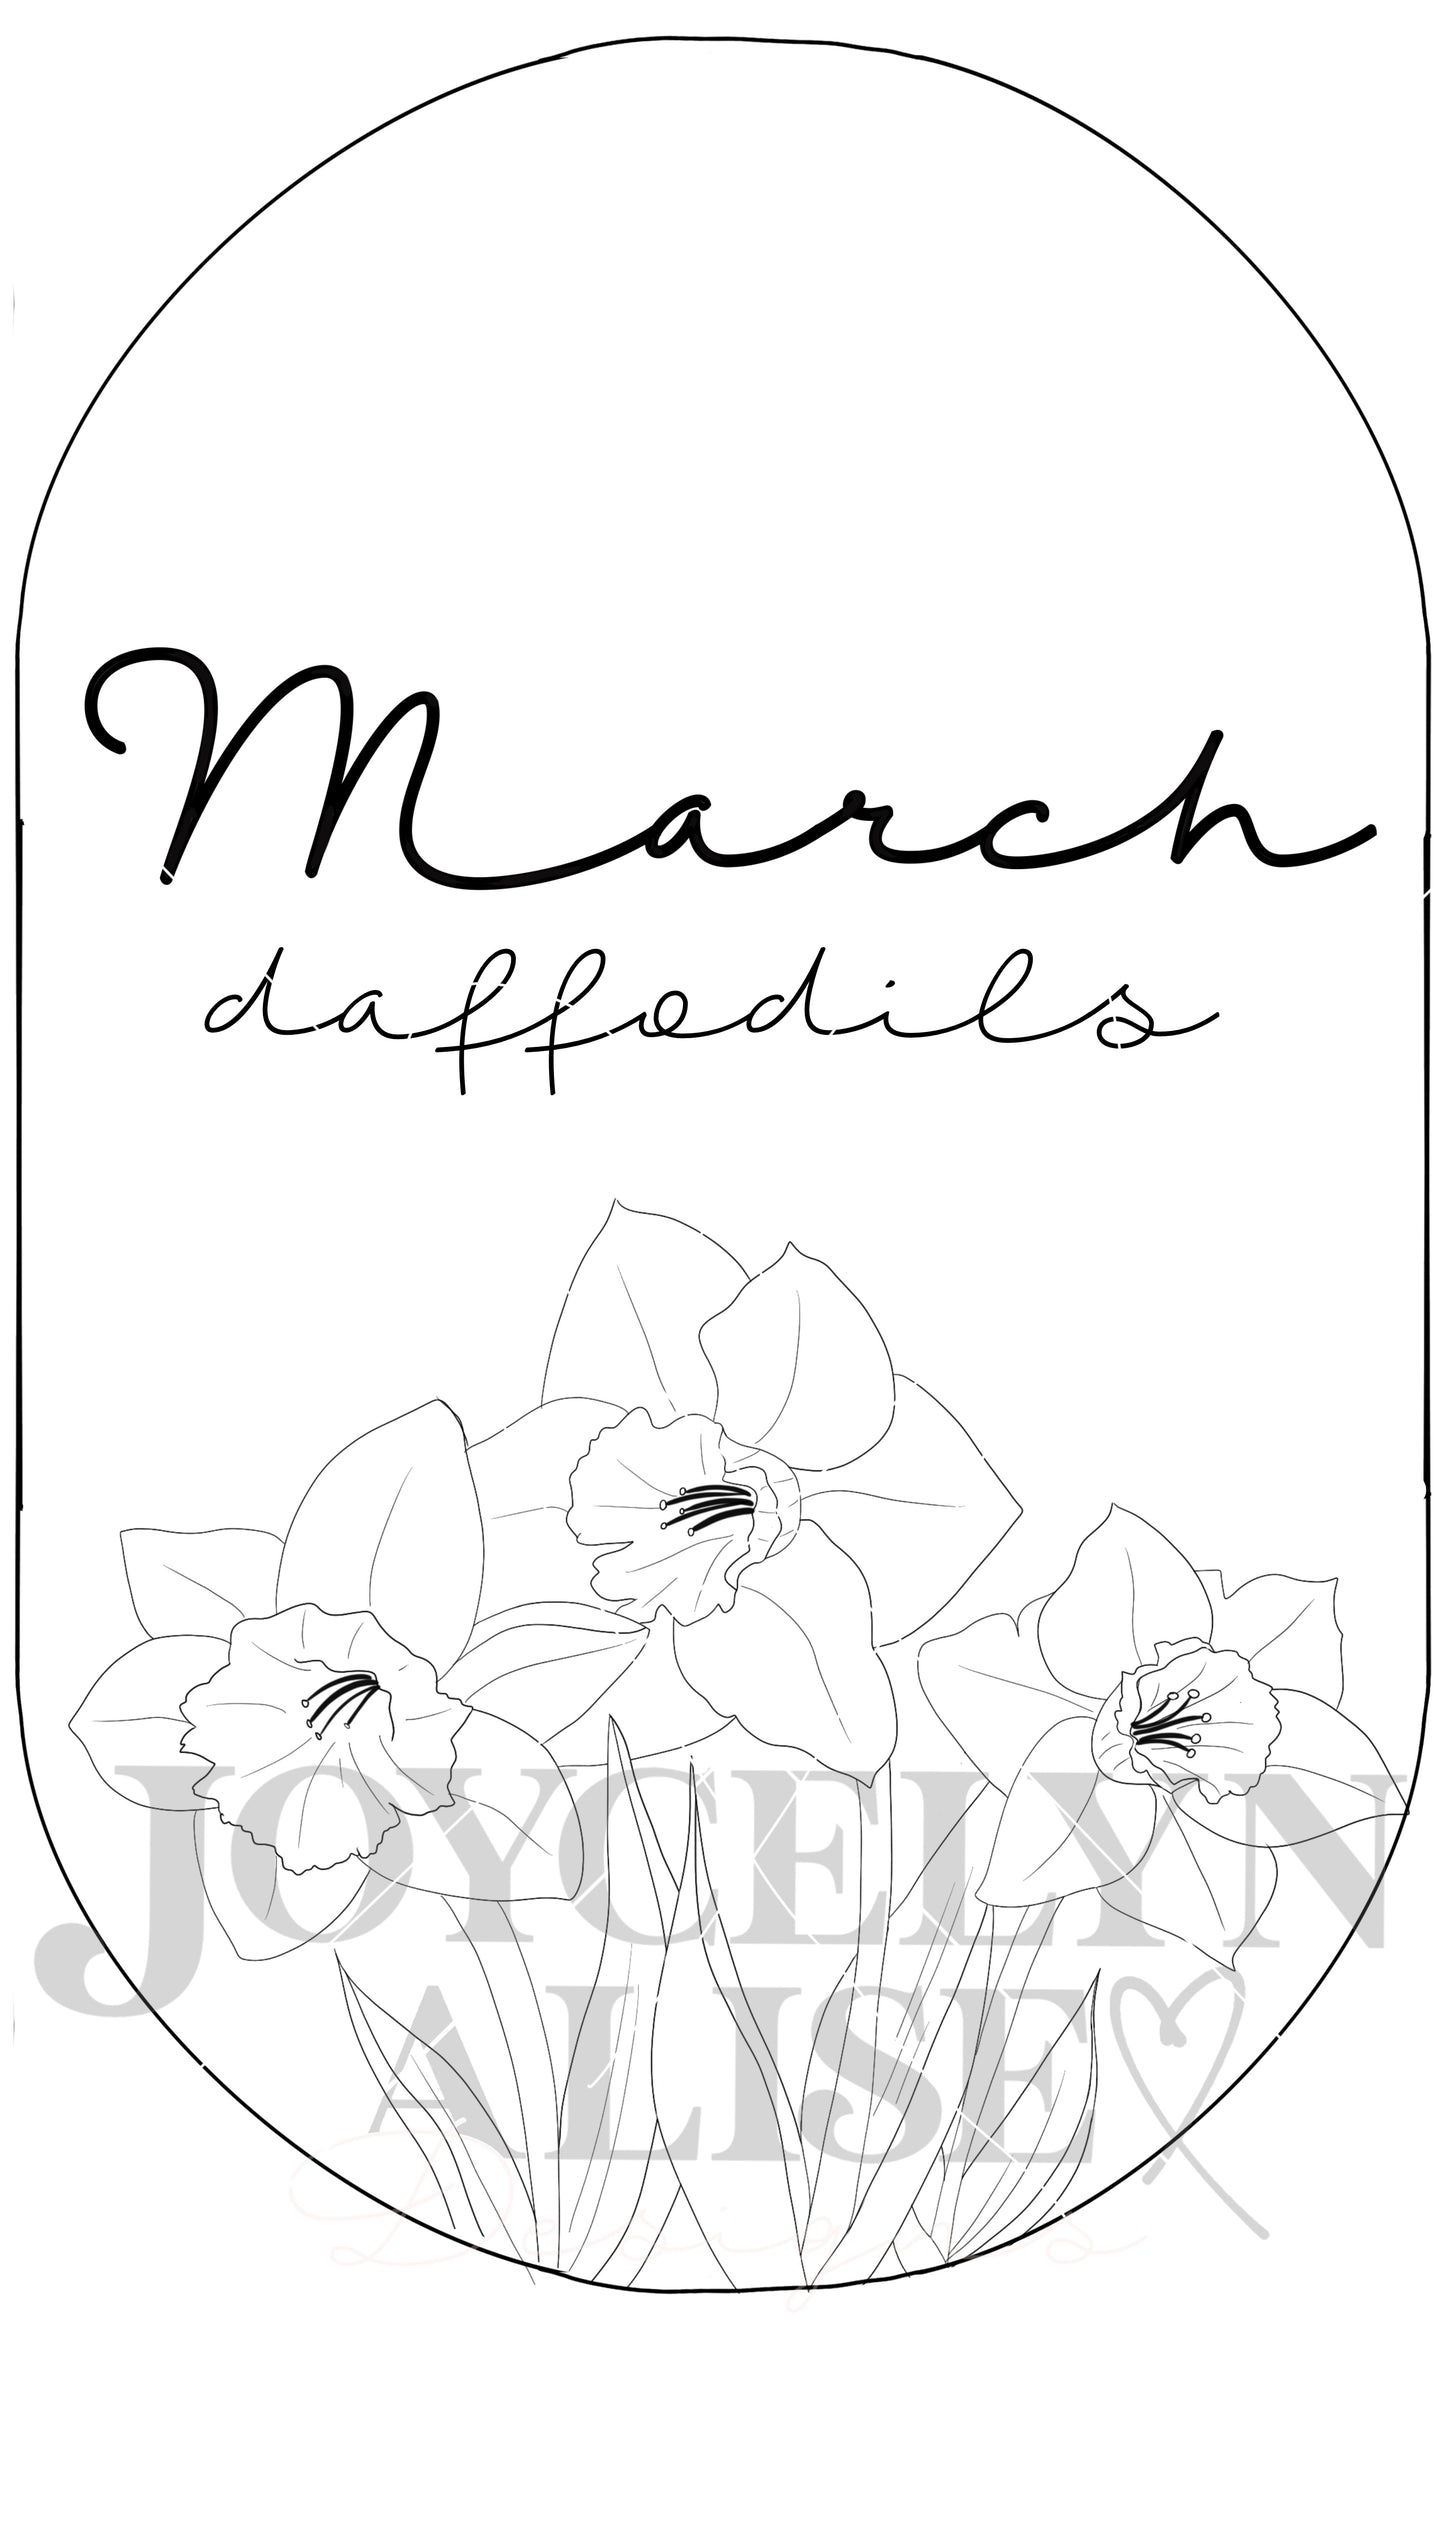 March daffodils scroll saw template